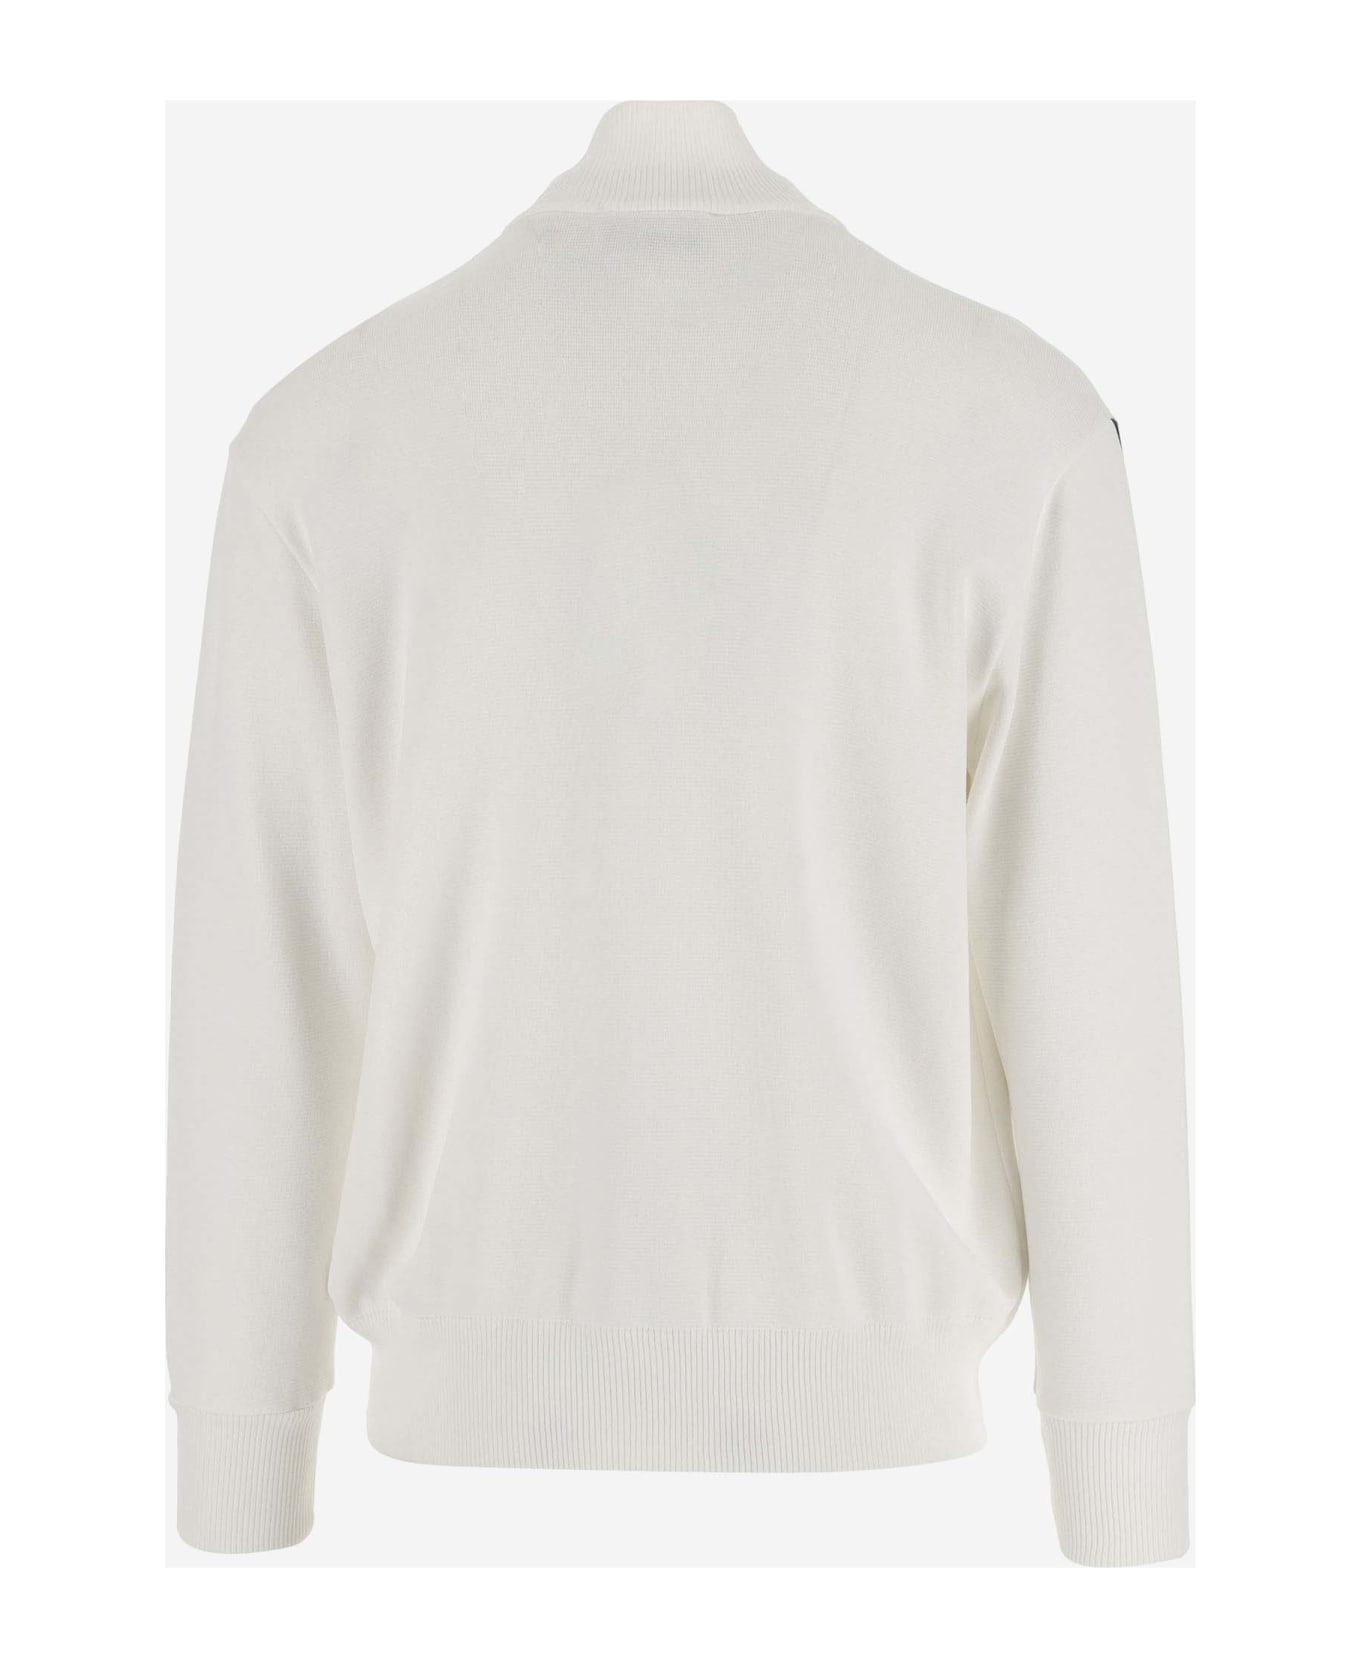 Autry Viscose Blend Sweatshirt With Logo - White ニットウェア